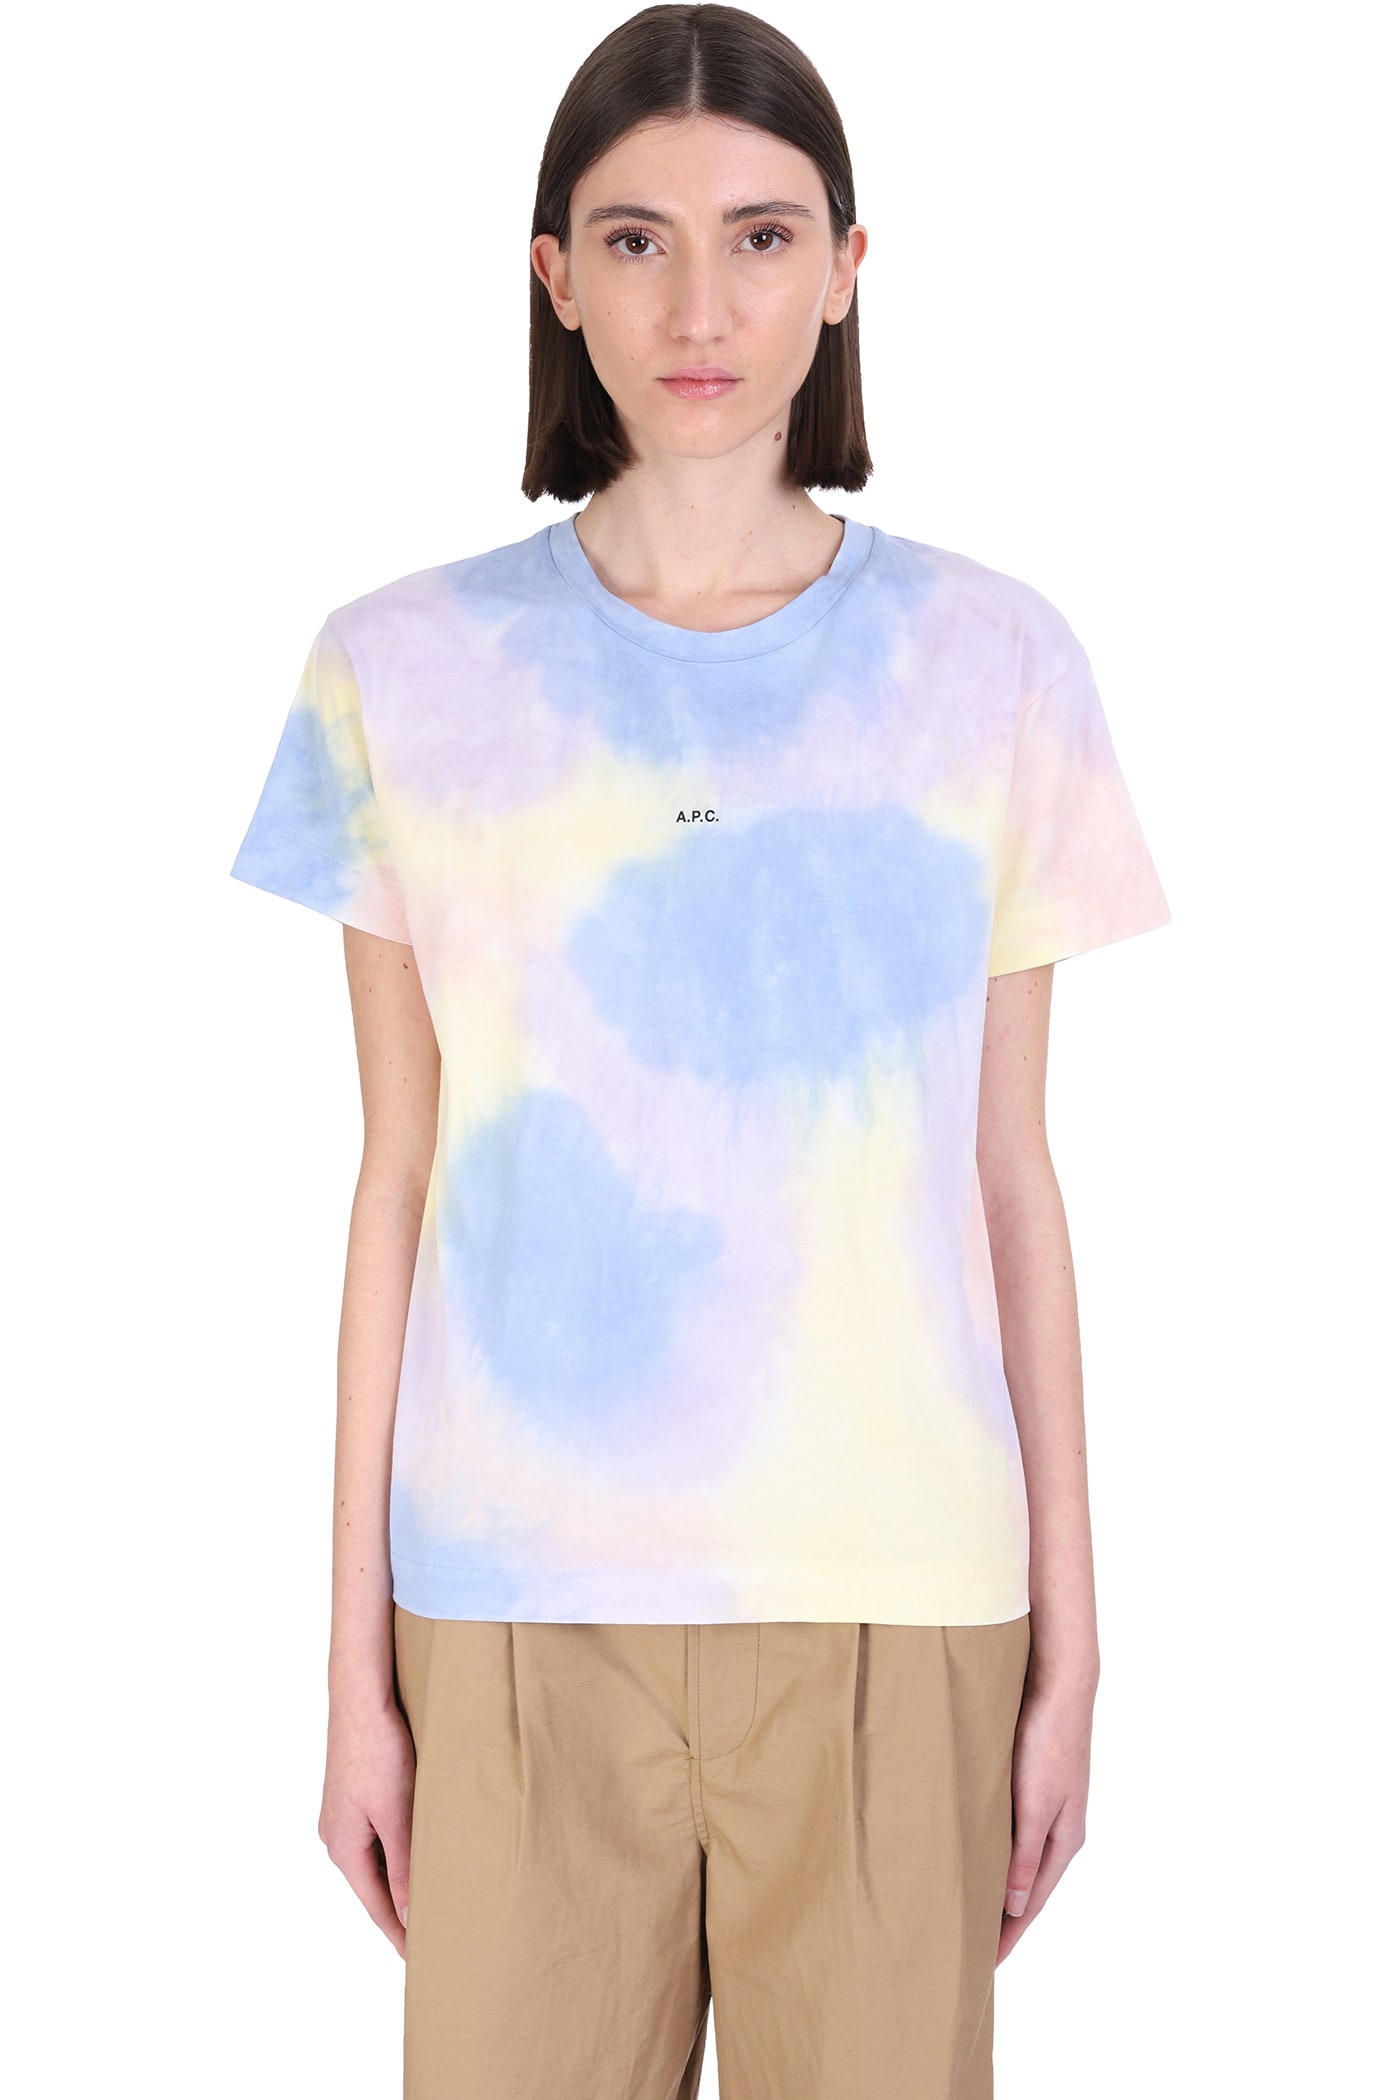 A.P.C. Janice T-shirt In Multicolor Cotton